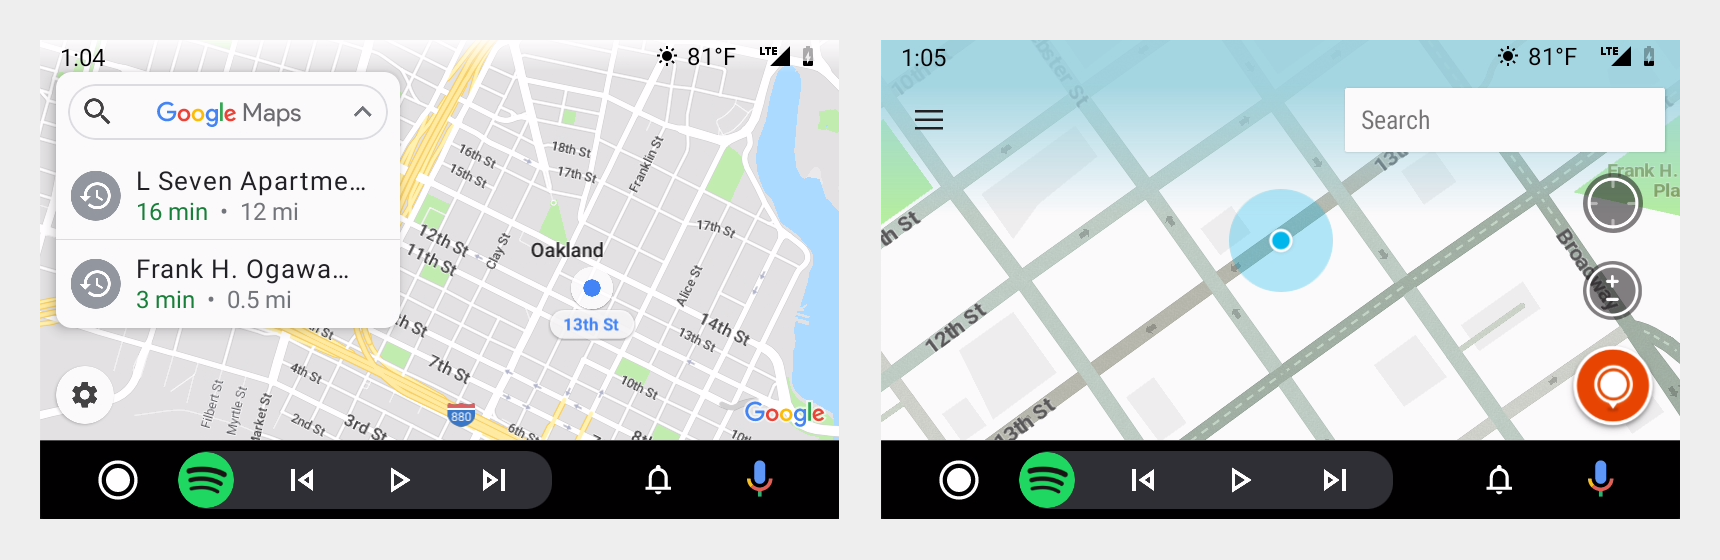 Screenshots von Navigations-Apps